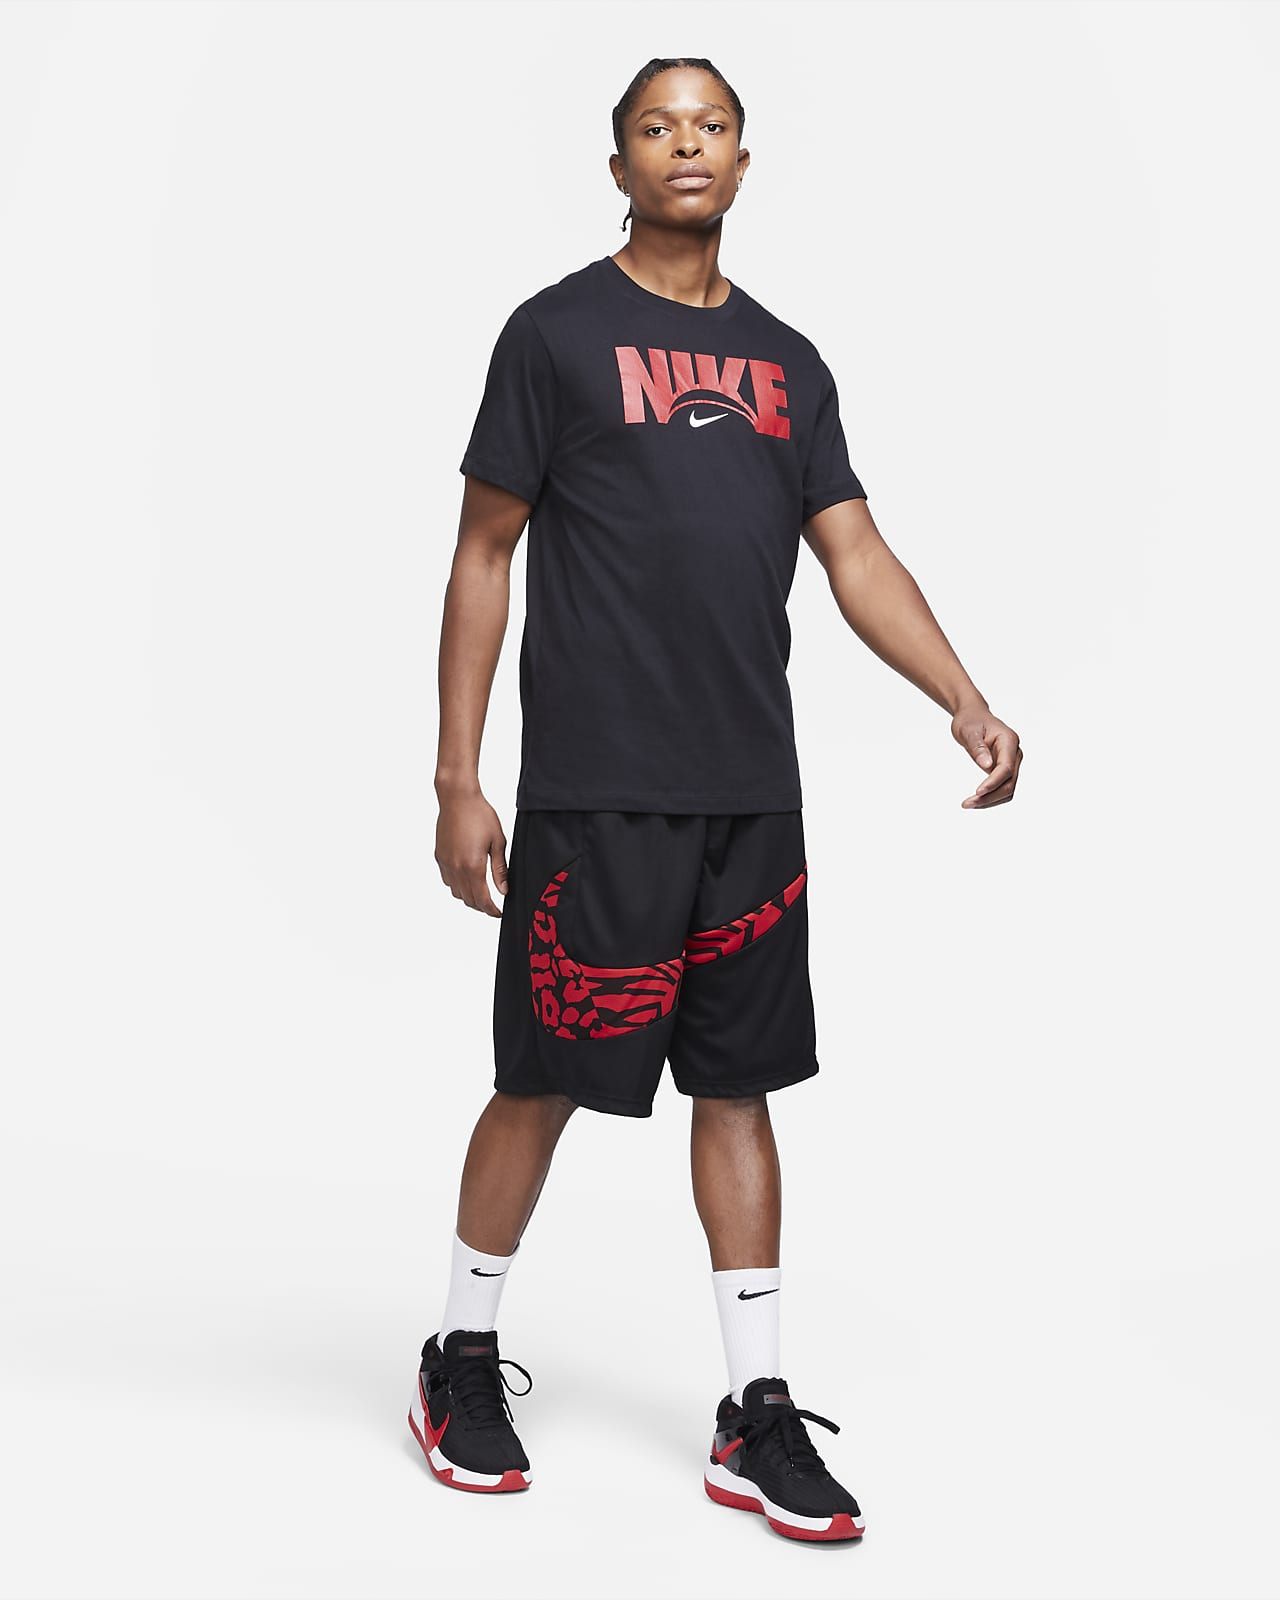 Nike Dri-FIT 2.0 Men's Basketball Printed Shorts